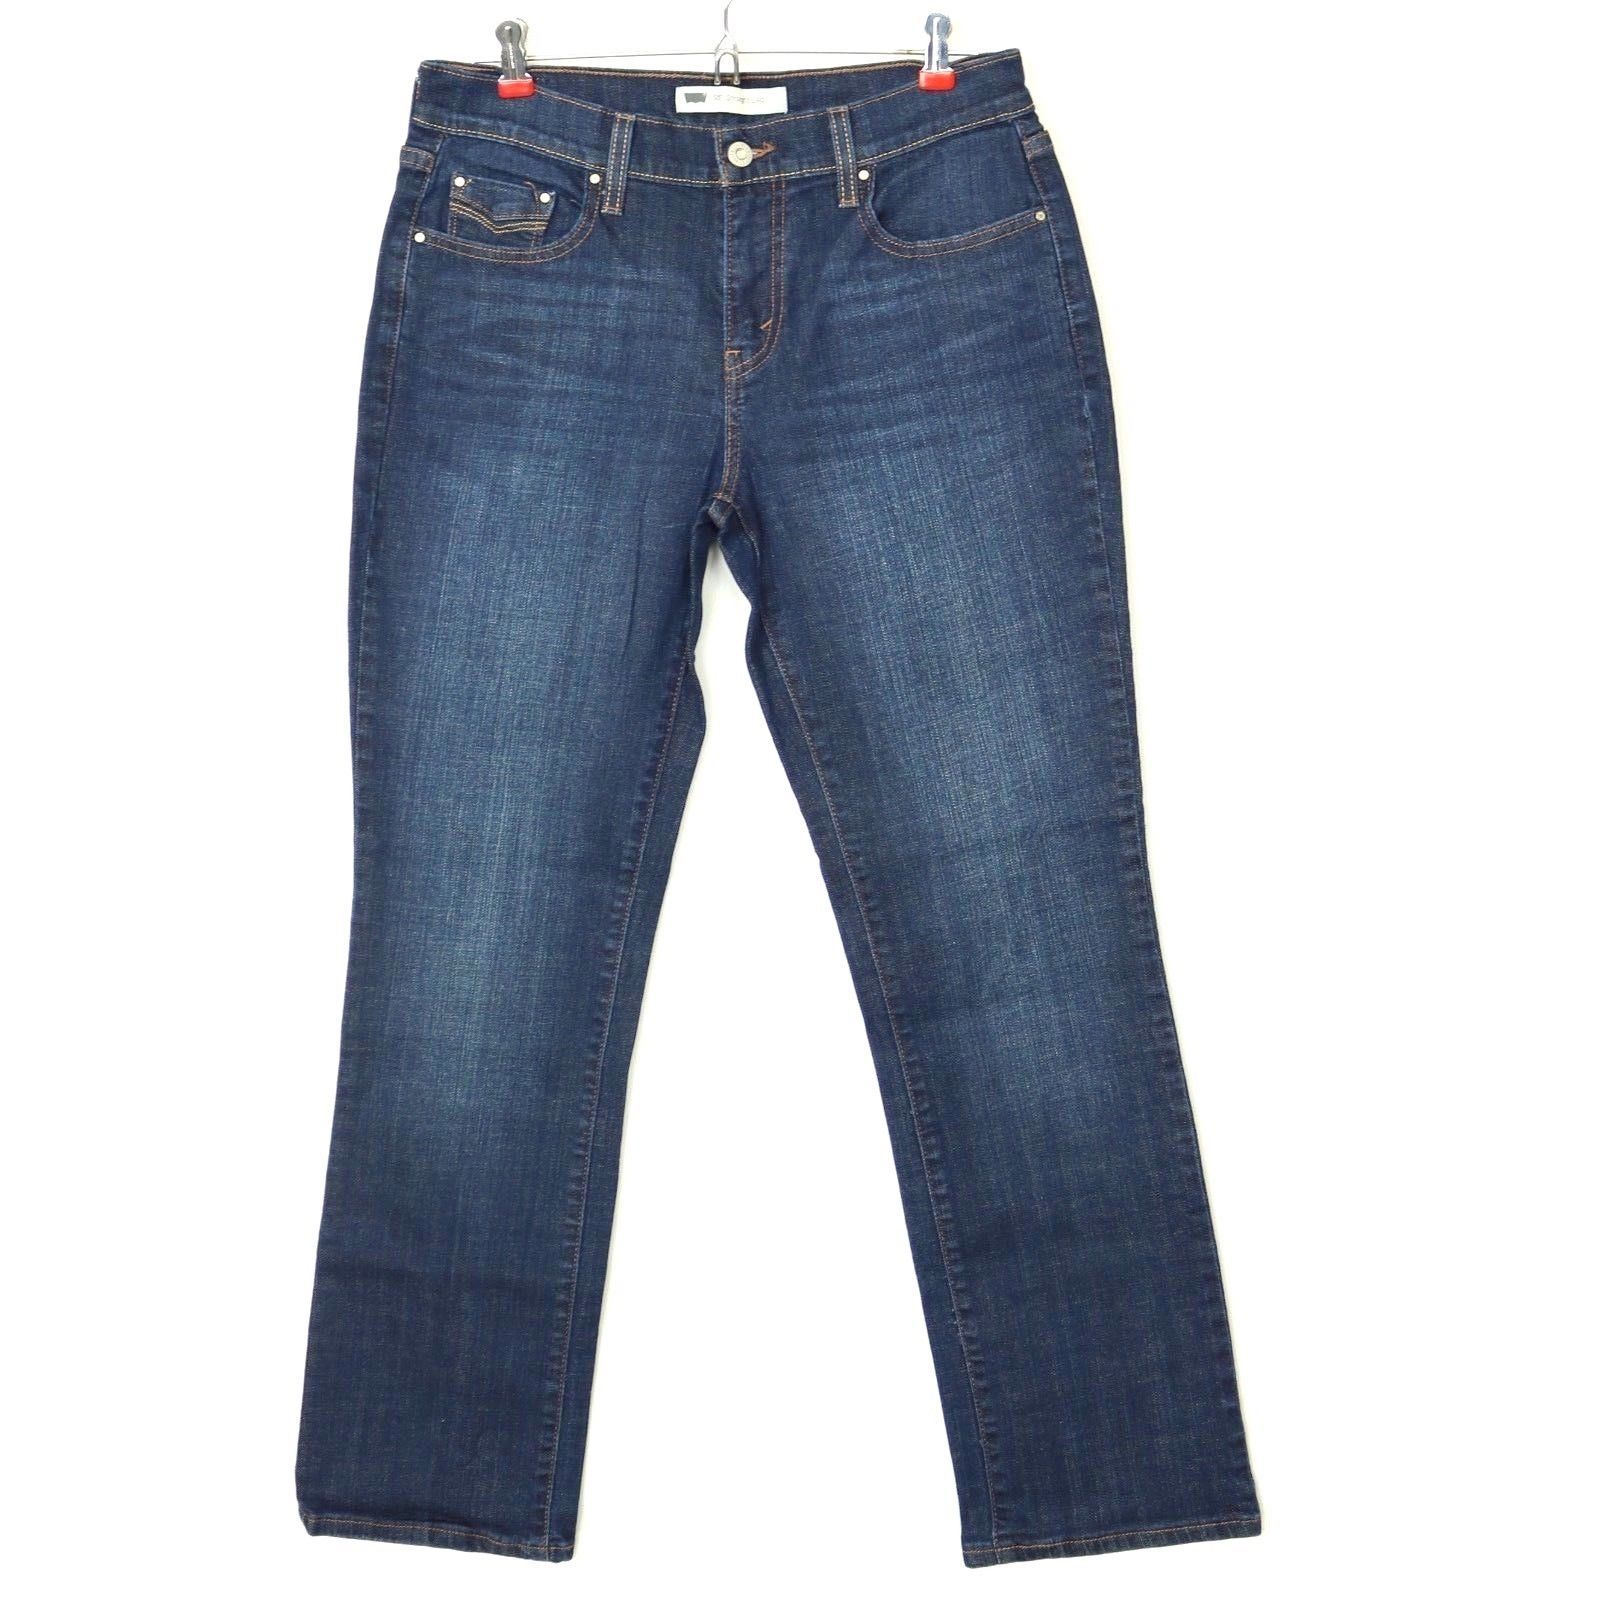 Levis Womens Jeans 505 Straight Leg Size 6 Short X 30 Stretch Flap ...